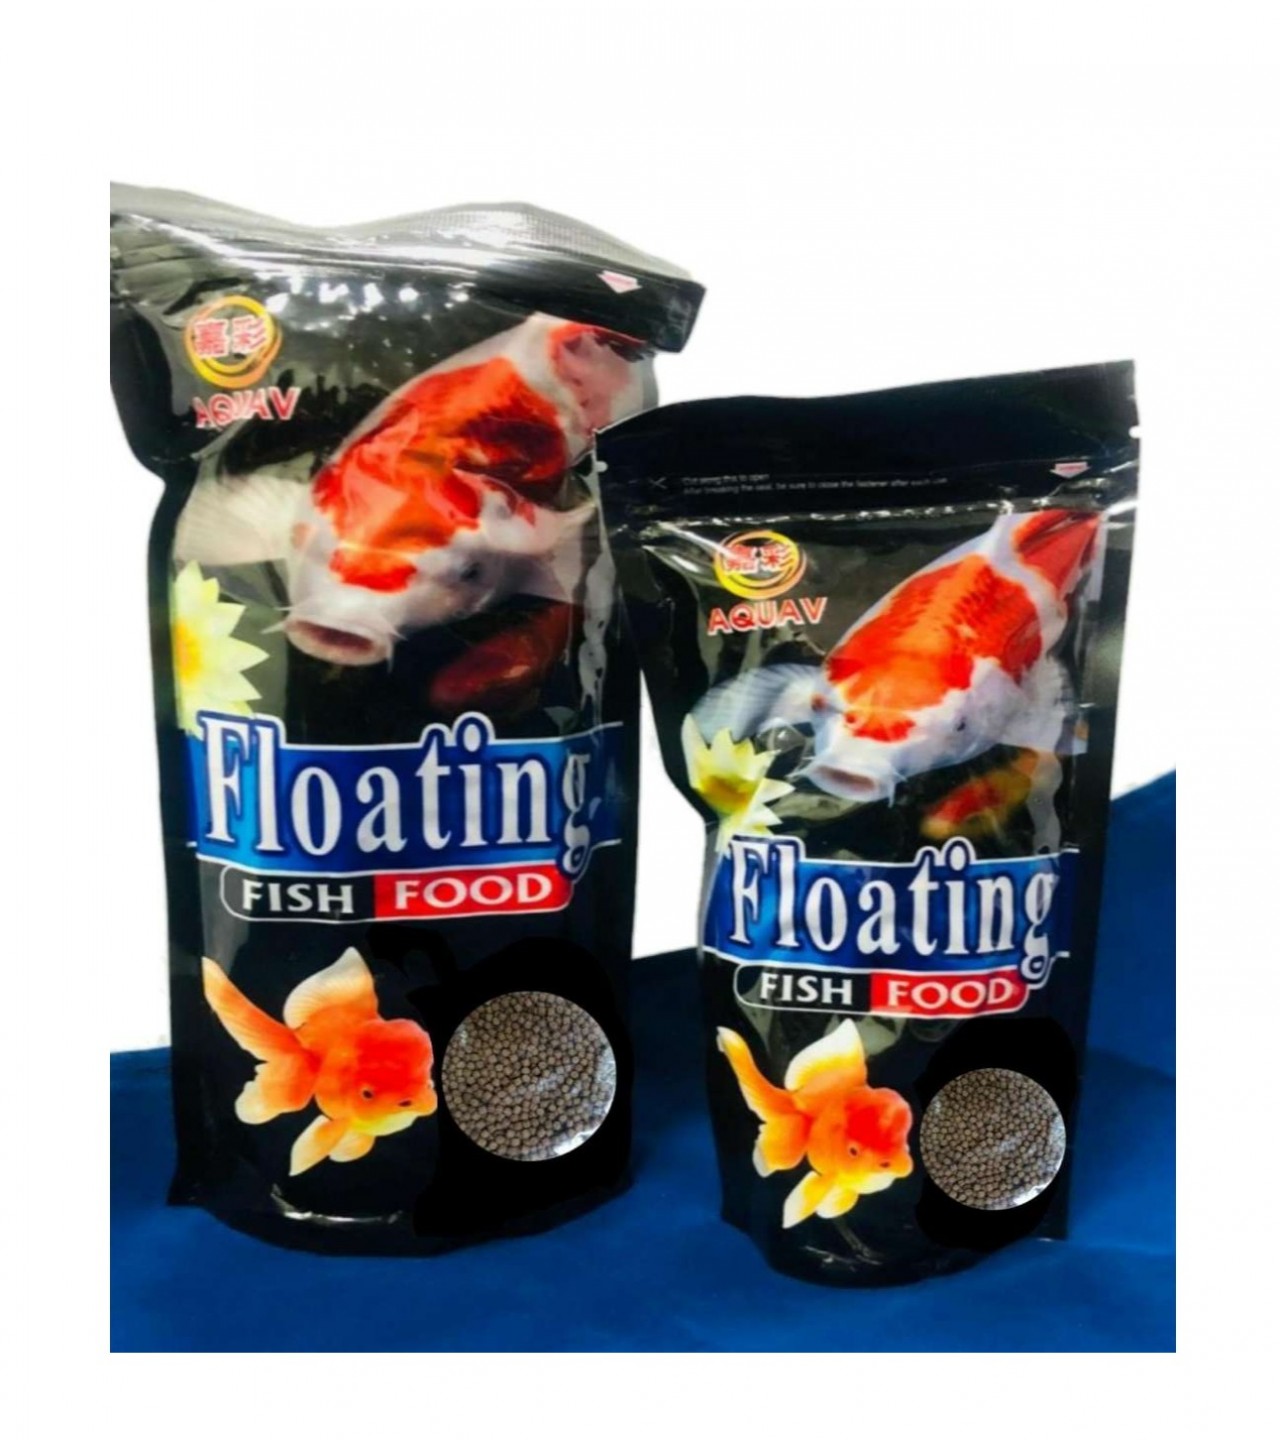 Aquav Floating Fish Food For Gold-Fish & Koi-Fish 1 Kg